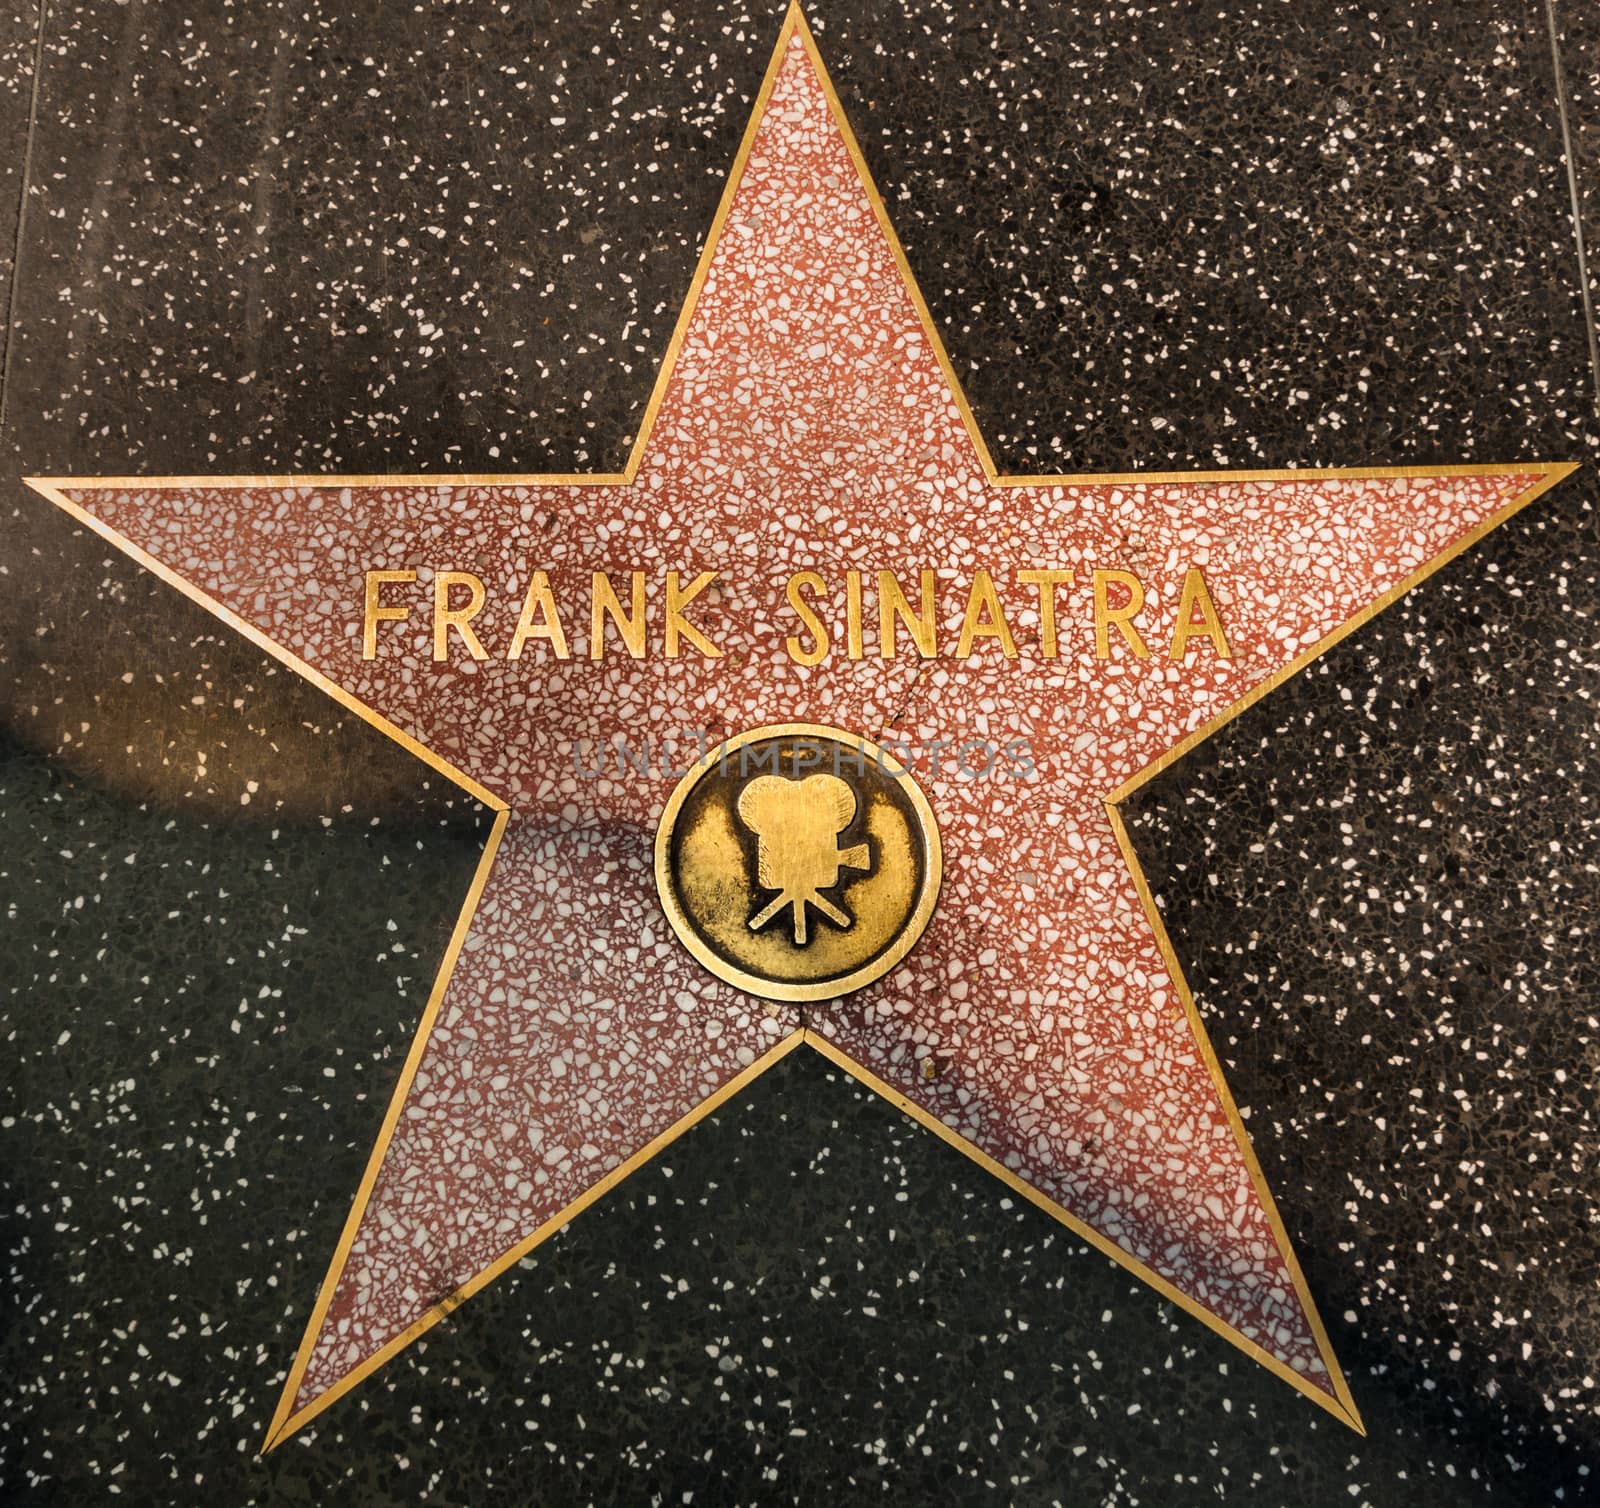 LOS ANGELES, USA - AUGUST 23: Frank Sinatra Hollywood Star,2013 by weltreisendertj